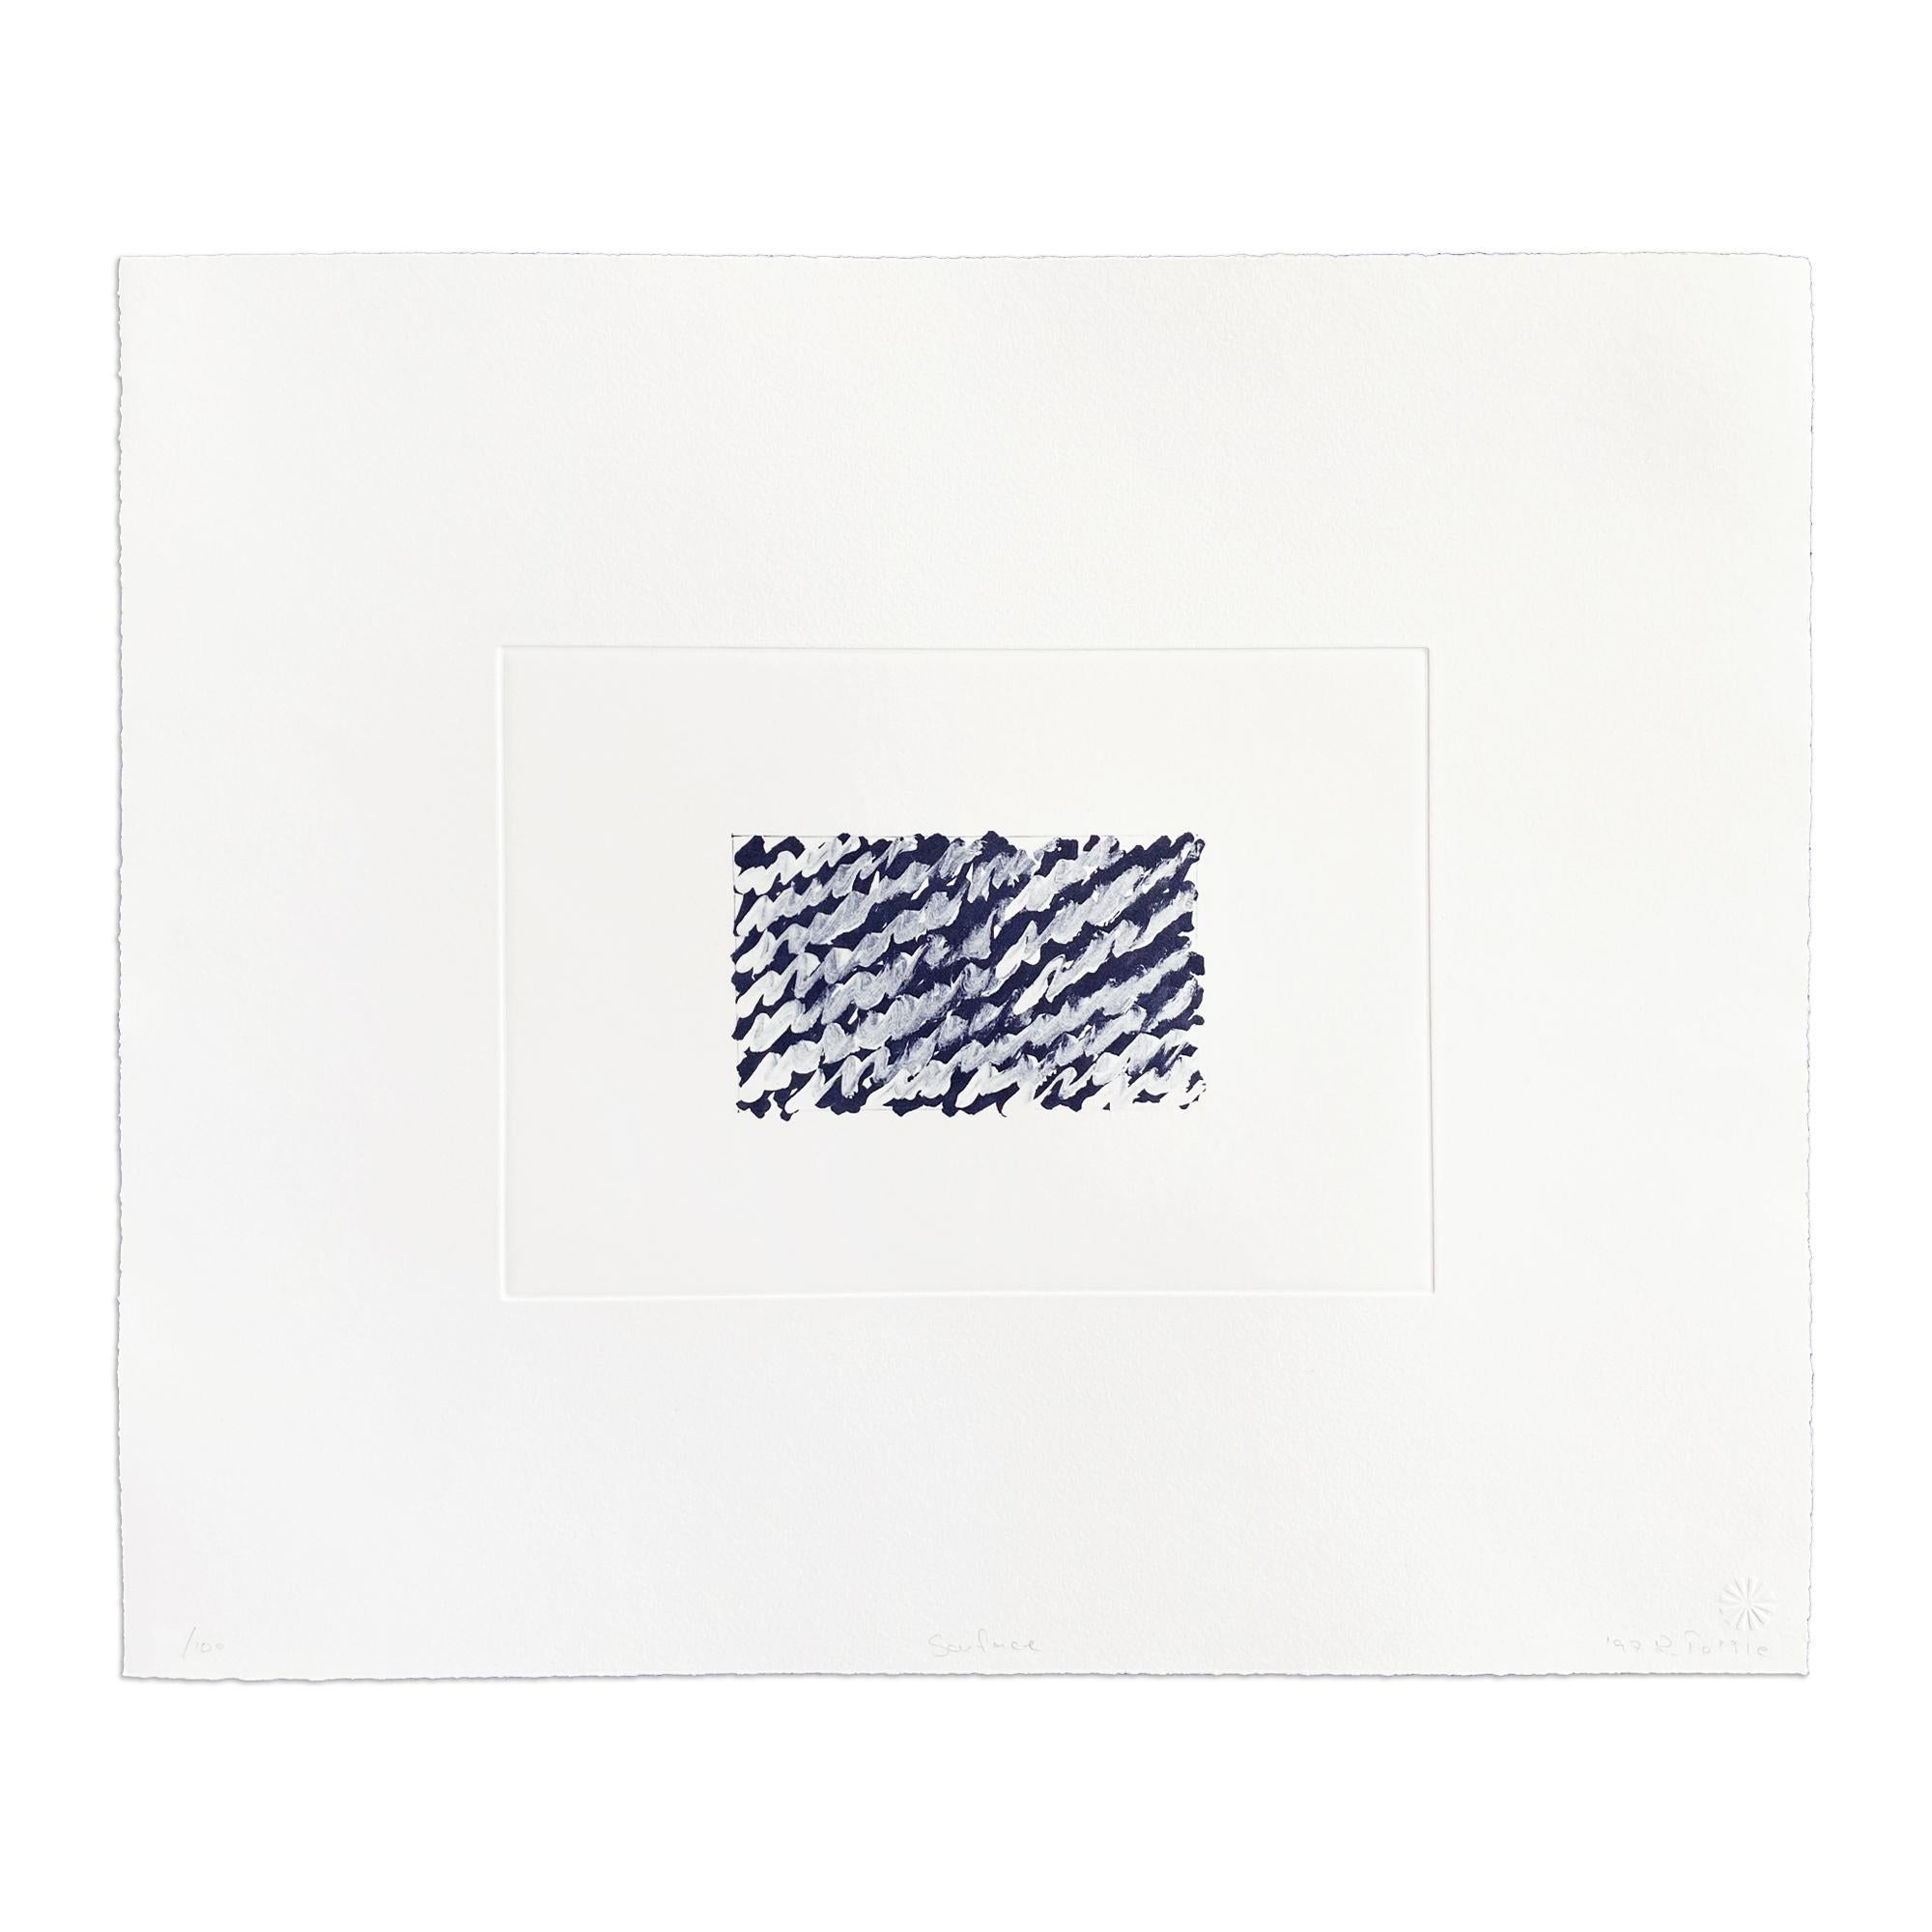 Richard Tuttle, Surface: Contemporary Art, Minimalism, Impression signée